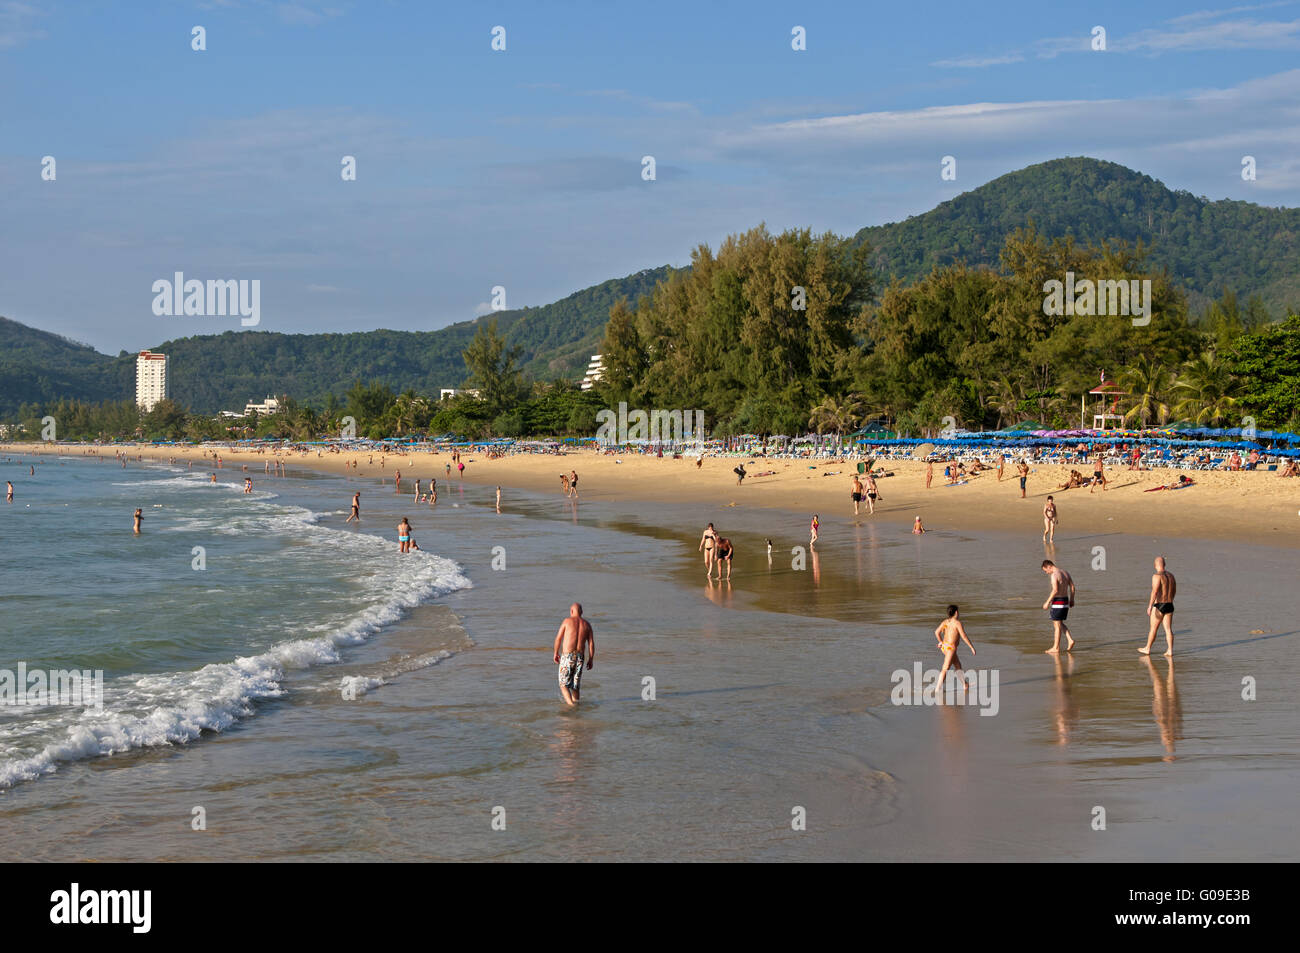 Le spiagge di sabbia e acque turchesi a Karon Beach, Foto Stock